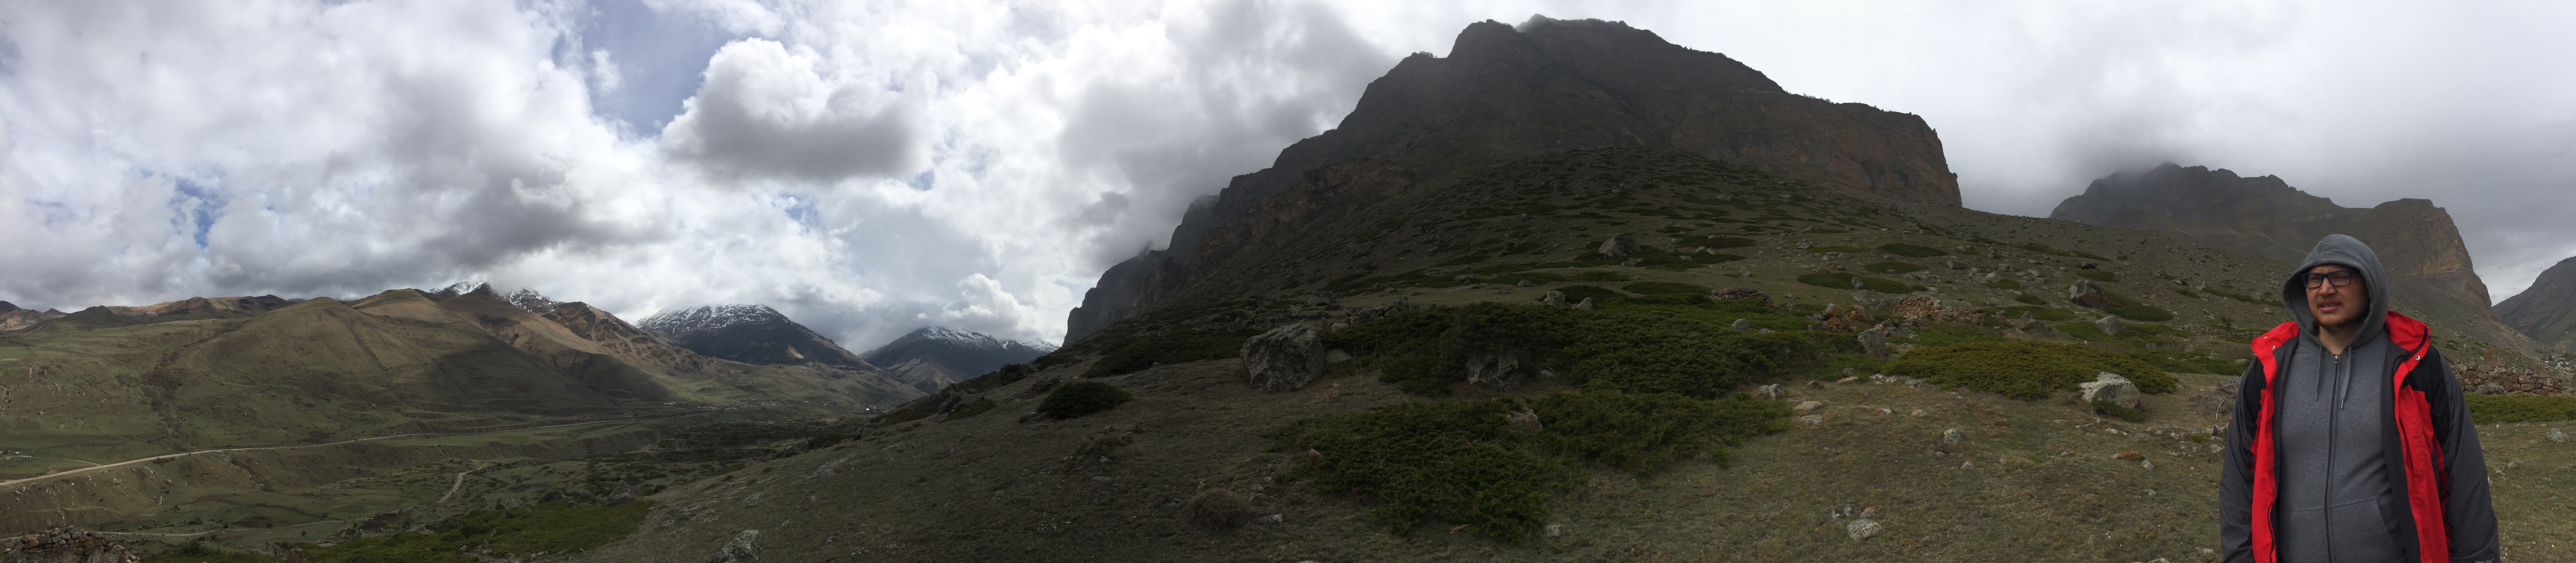 Eltubu mountains panorama and Pavel